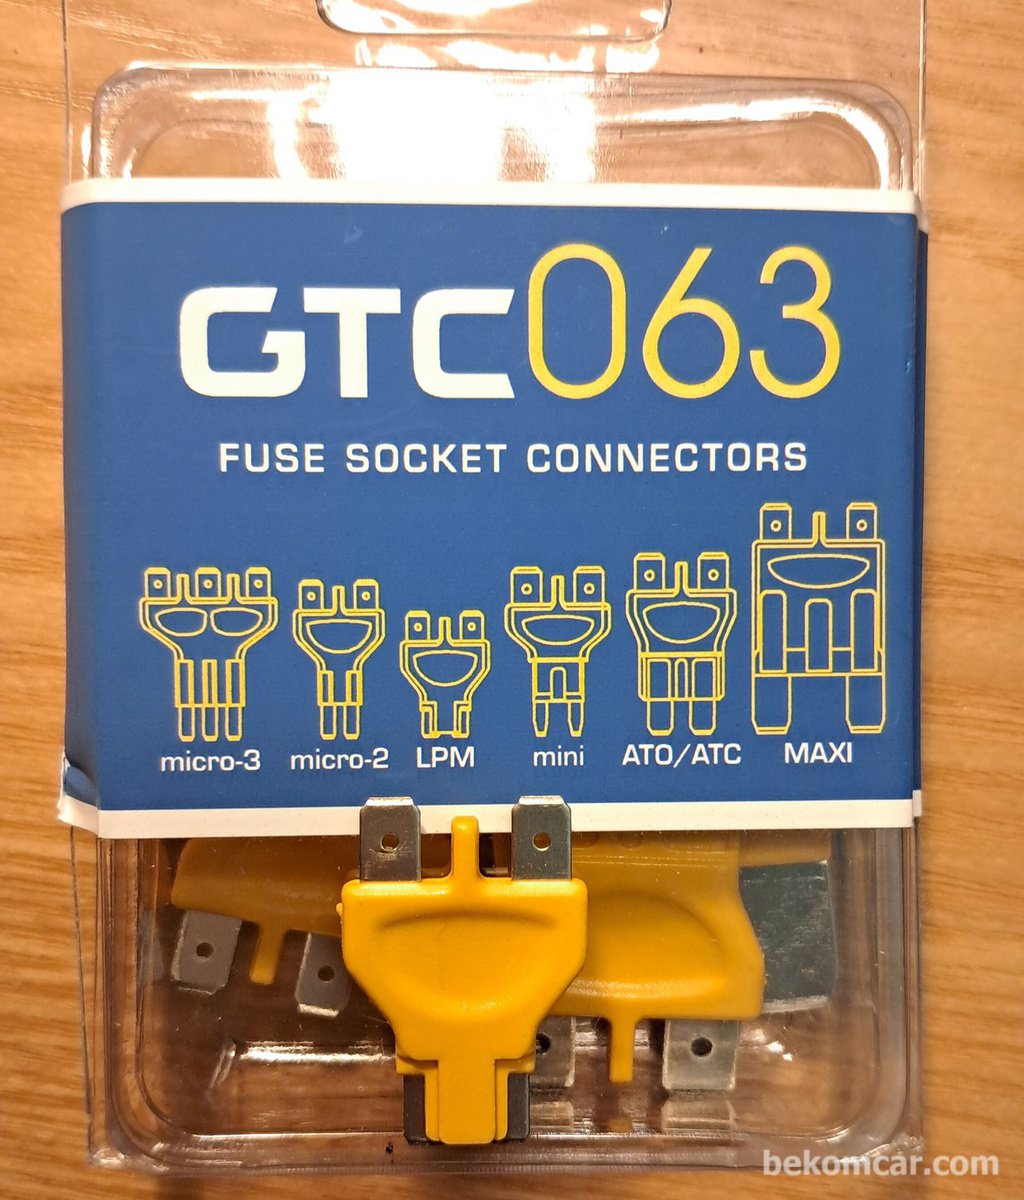 GTC063 Fuse Socket Connector Kit by GTC, General Technologies Corp|ベコムカー (bekomcar)